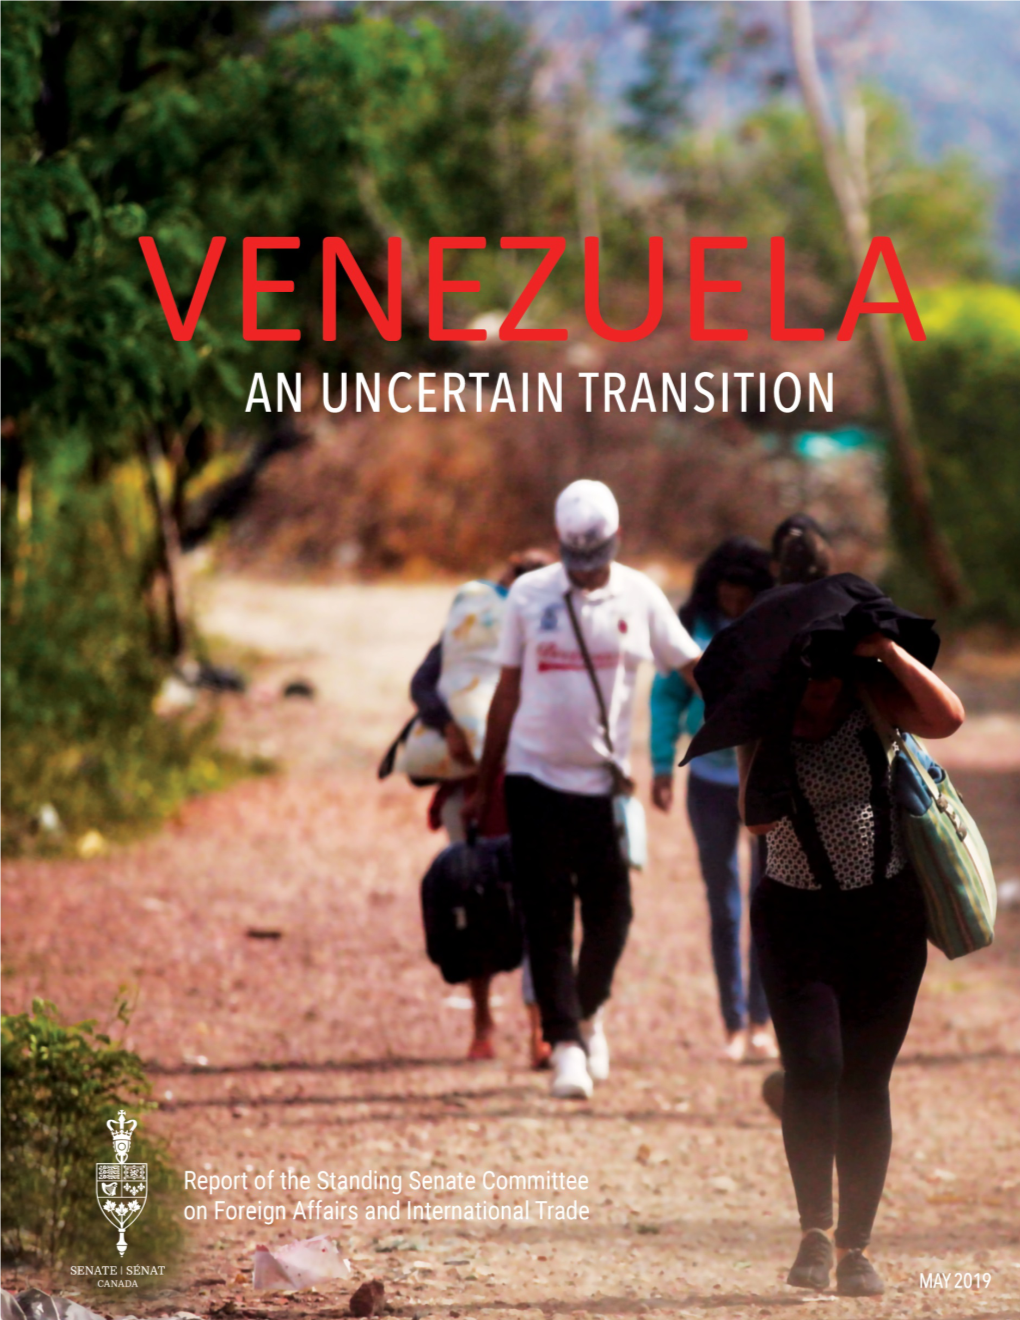 Venezuela: an Uncertain Transition